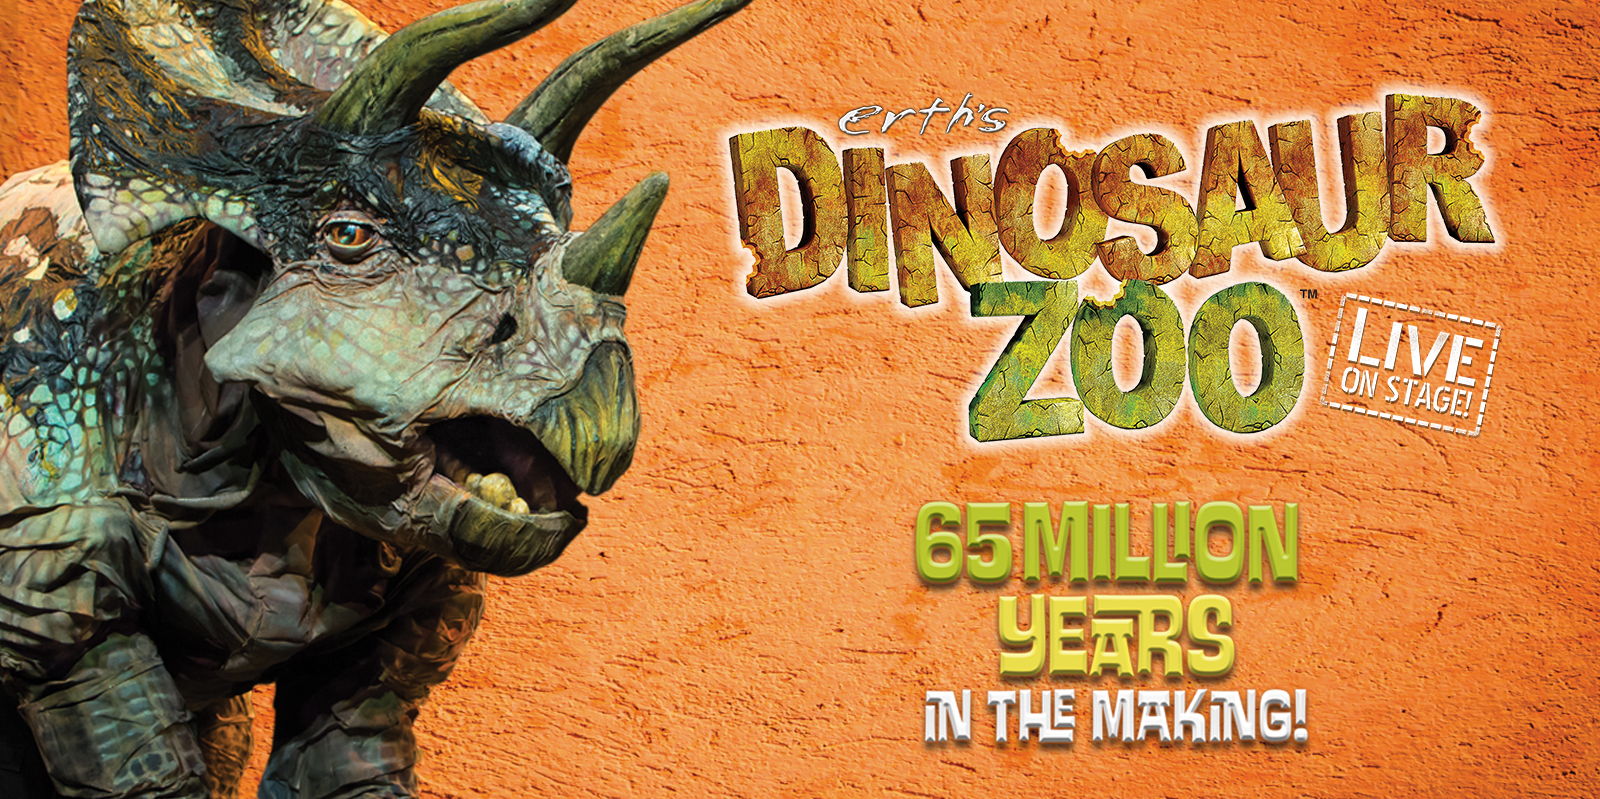 Erth’s Dinosaur Zoo Live promotional image